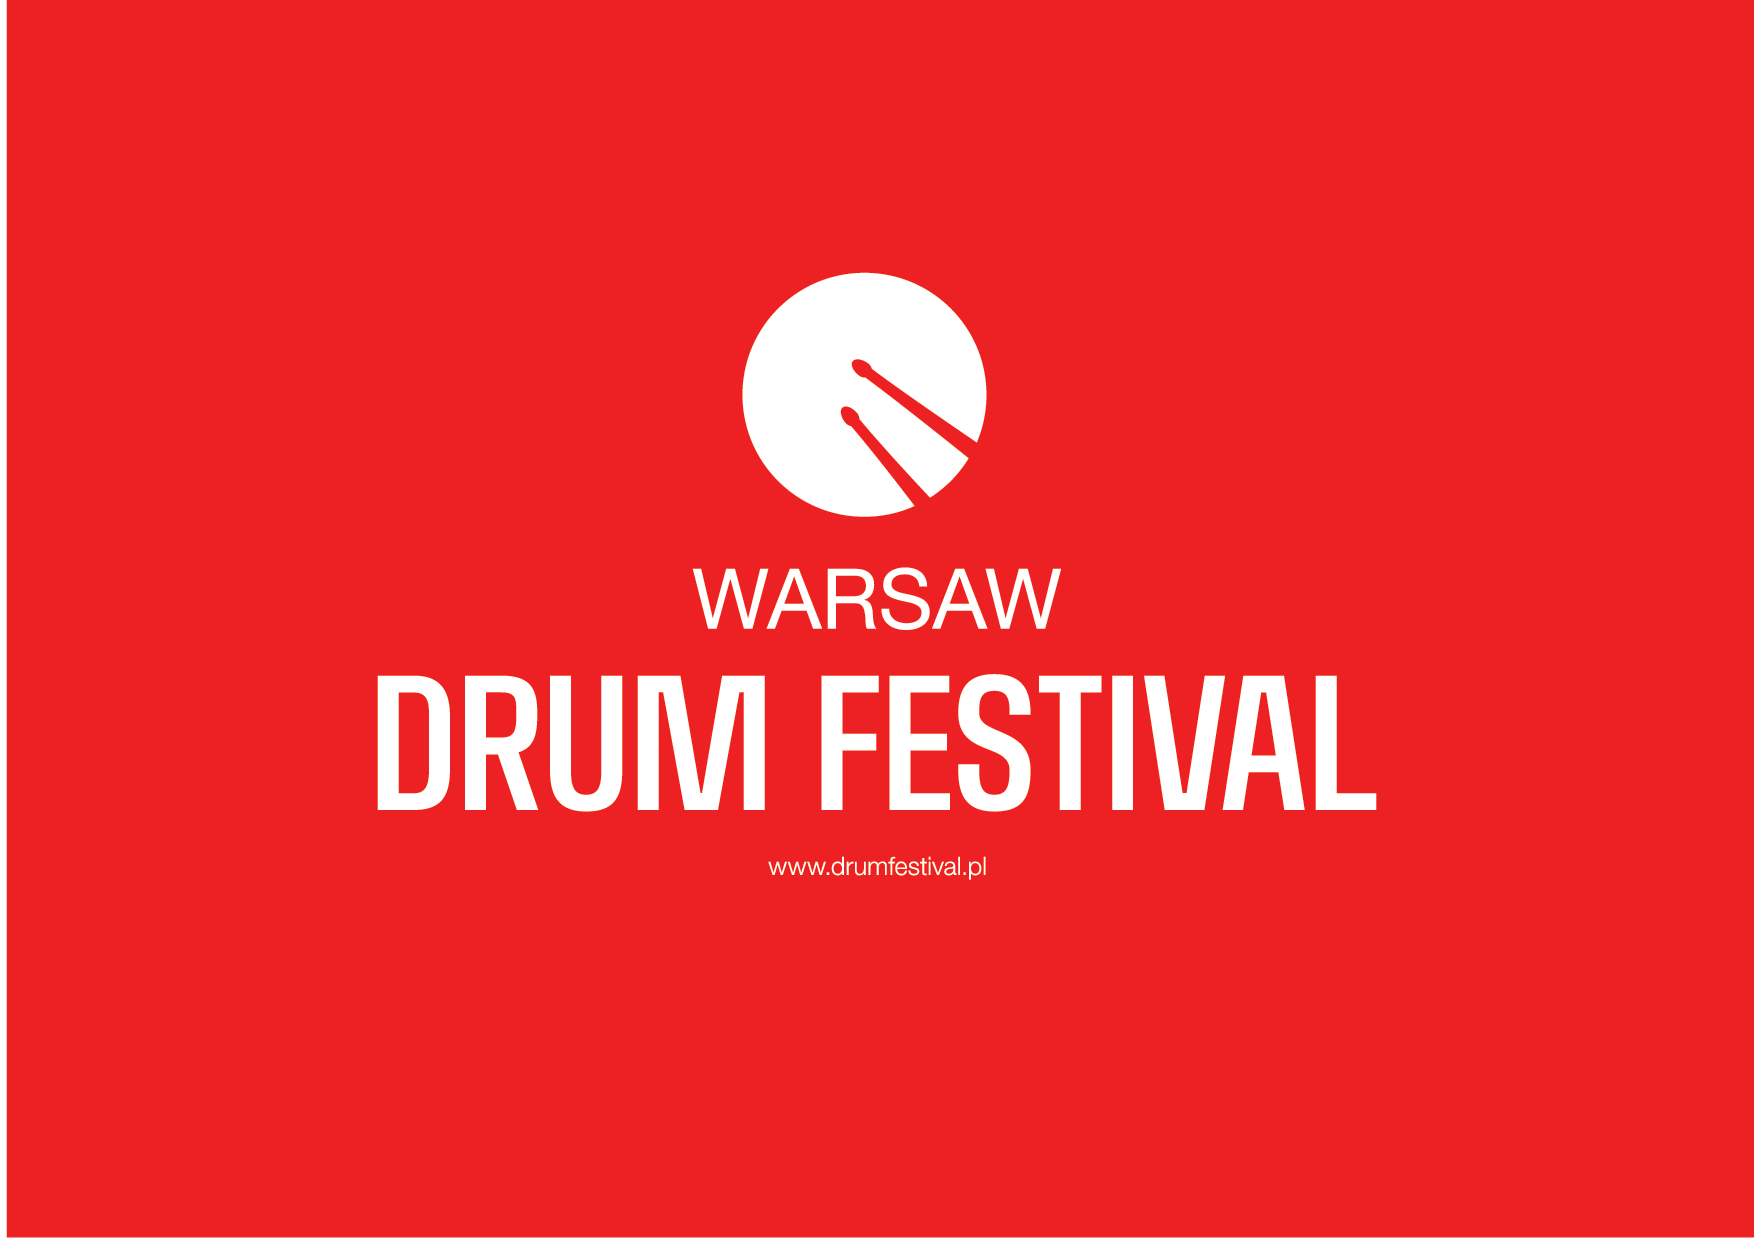 Warsaw Drum Festival 2015 Contest